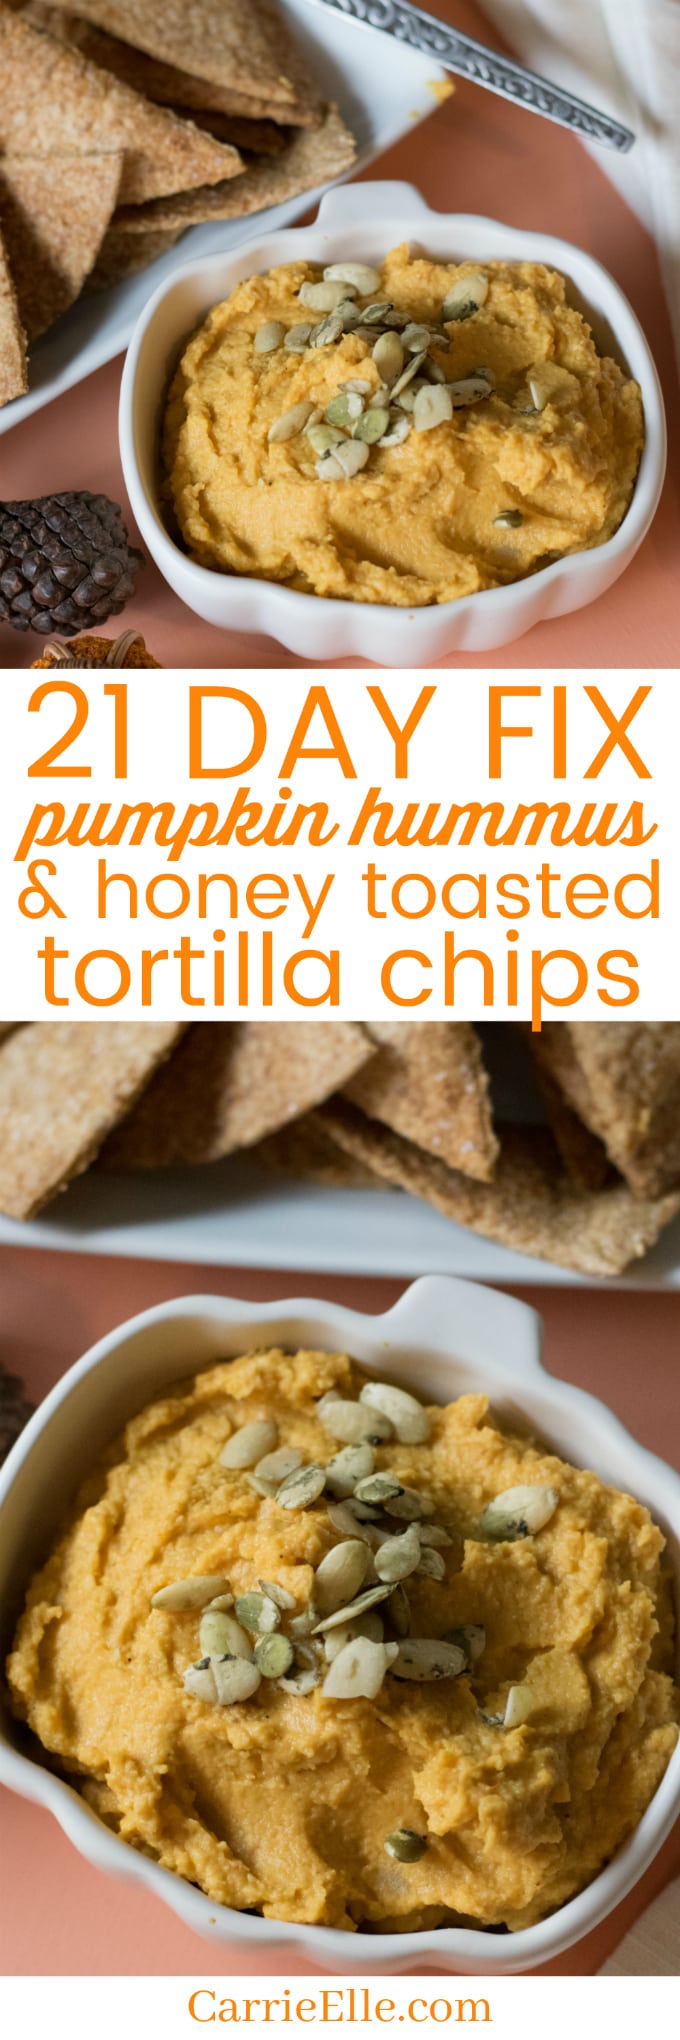 21 Day Fix Pumpkin Hummus